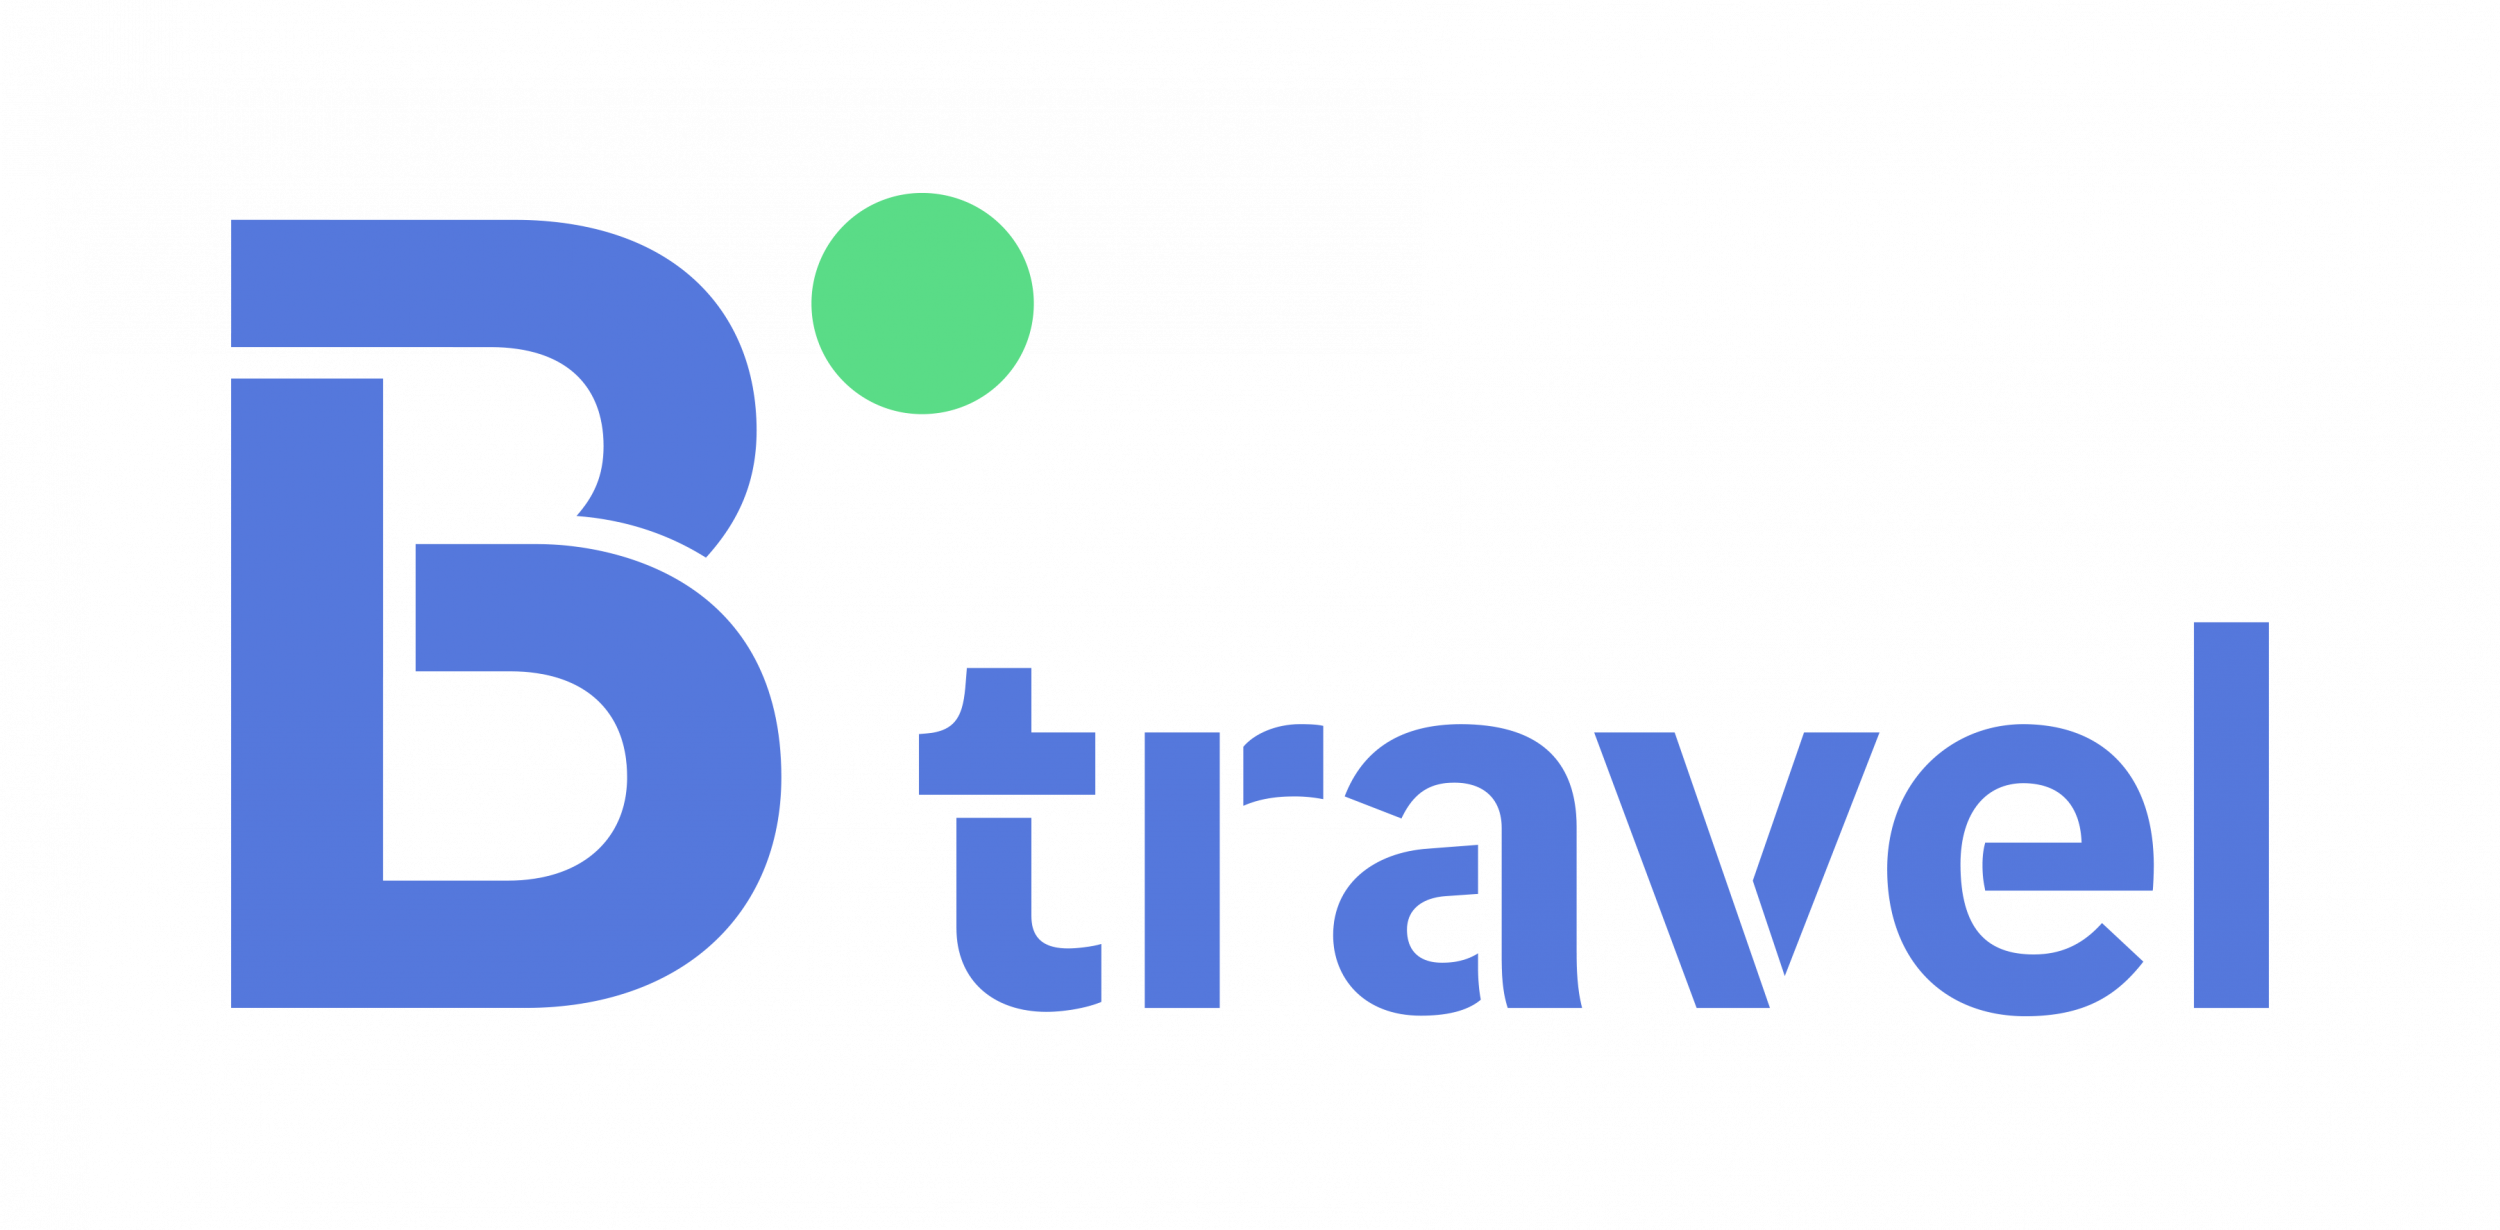 B the travel brand